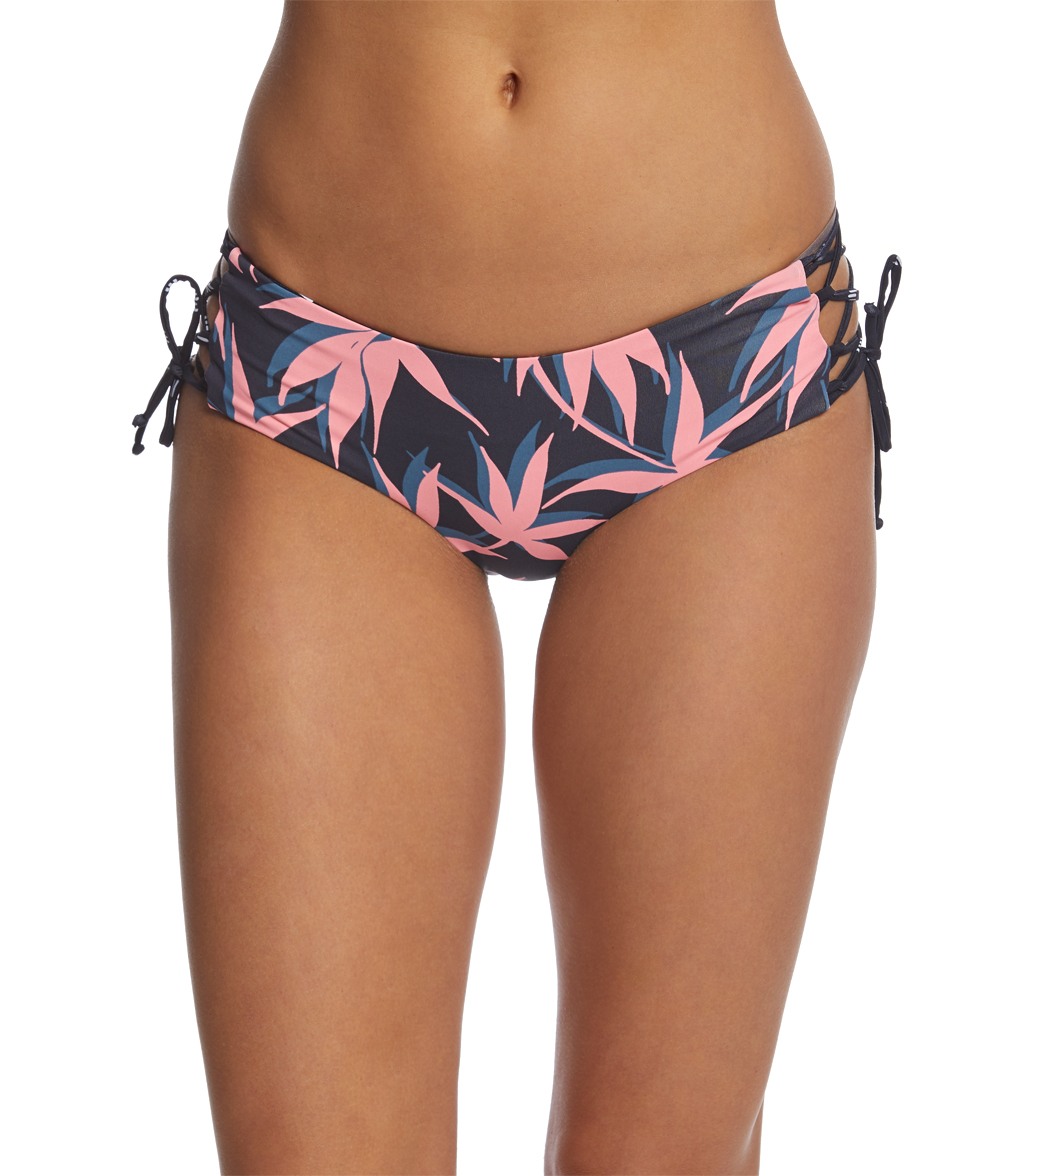 Carve Designs Mustique Reversible Bikini Bottom - Flamingo Palms/Dash X-Small Nylon/Spandex - Swimoutlet.com